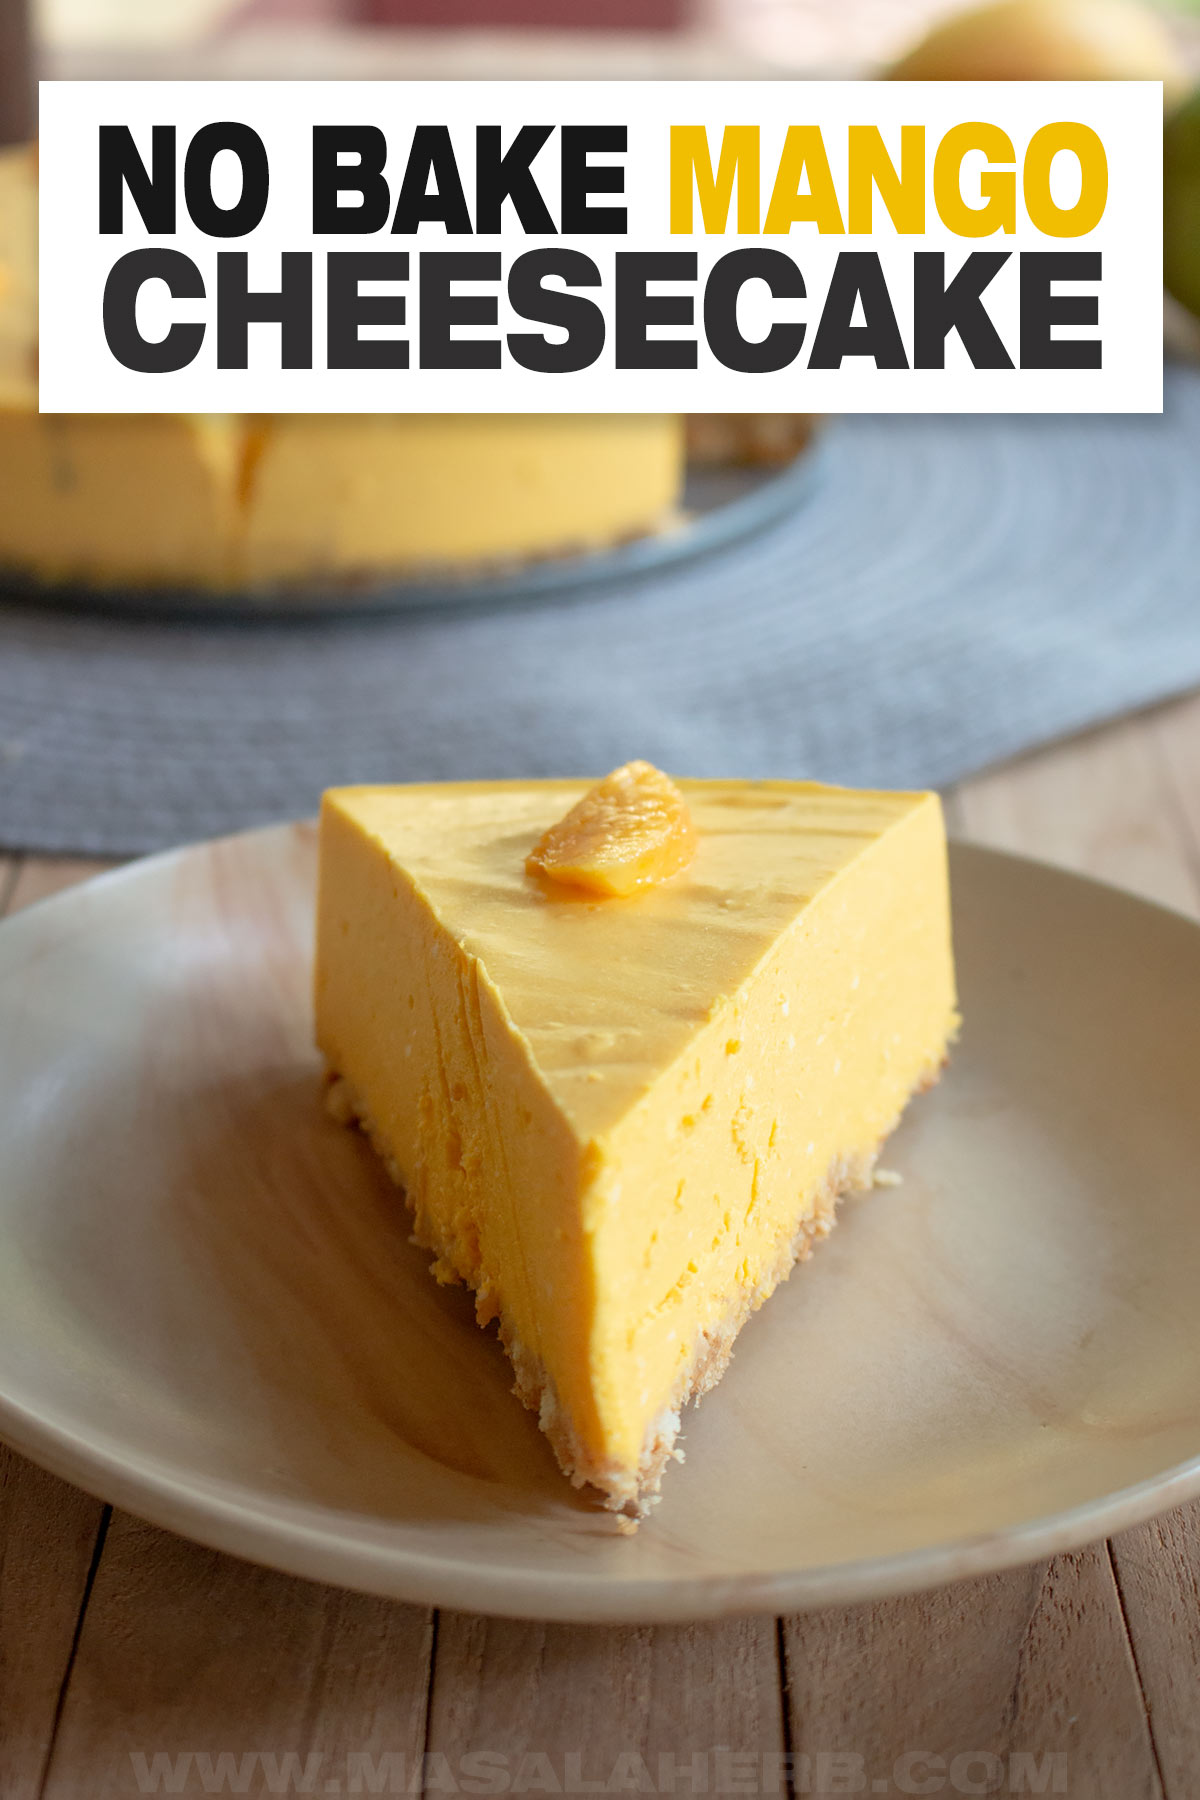 No-Bake Mango Cheesecake Recipe cover image